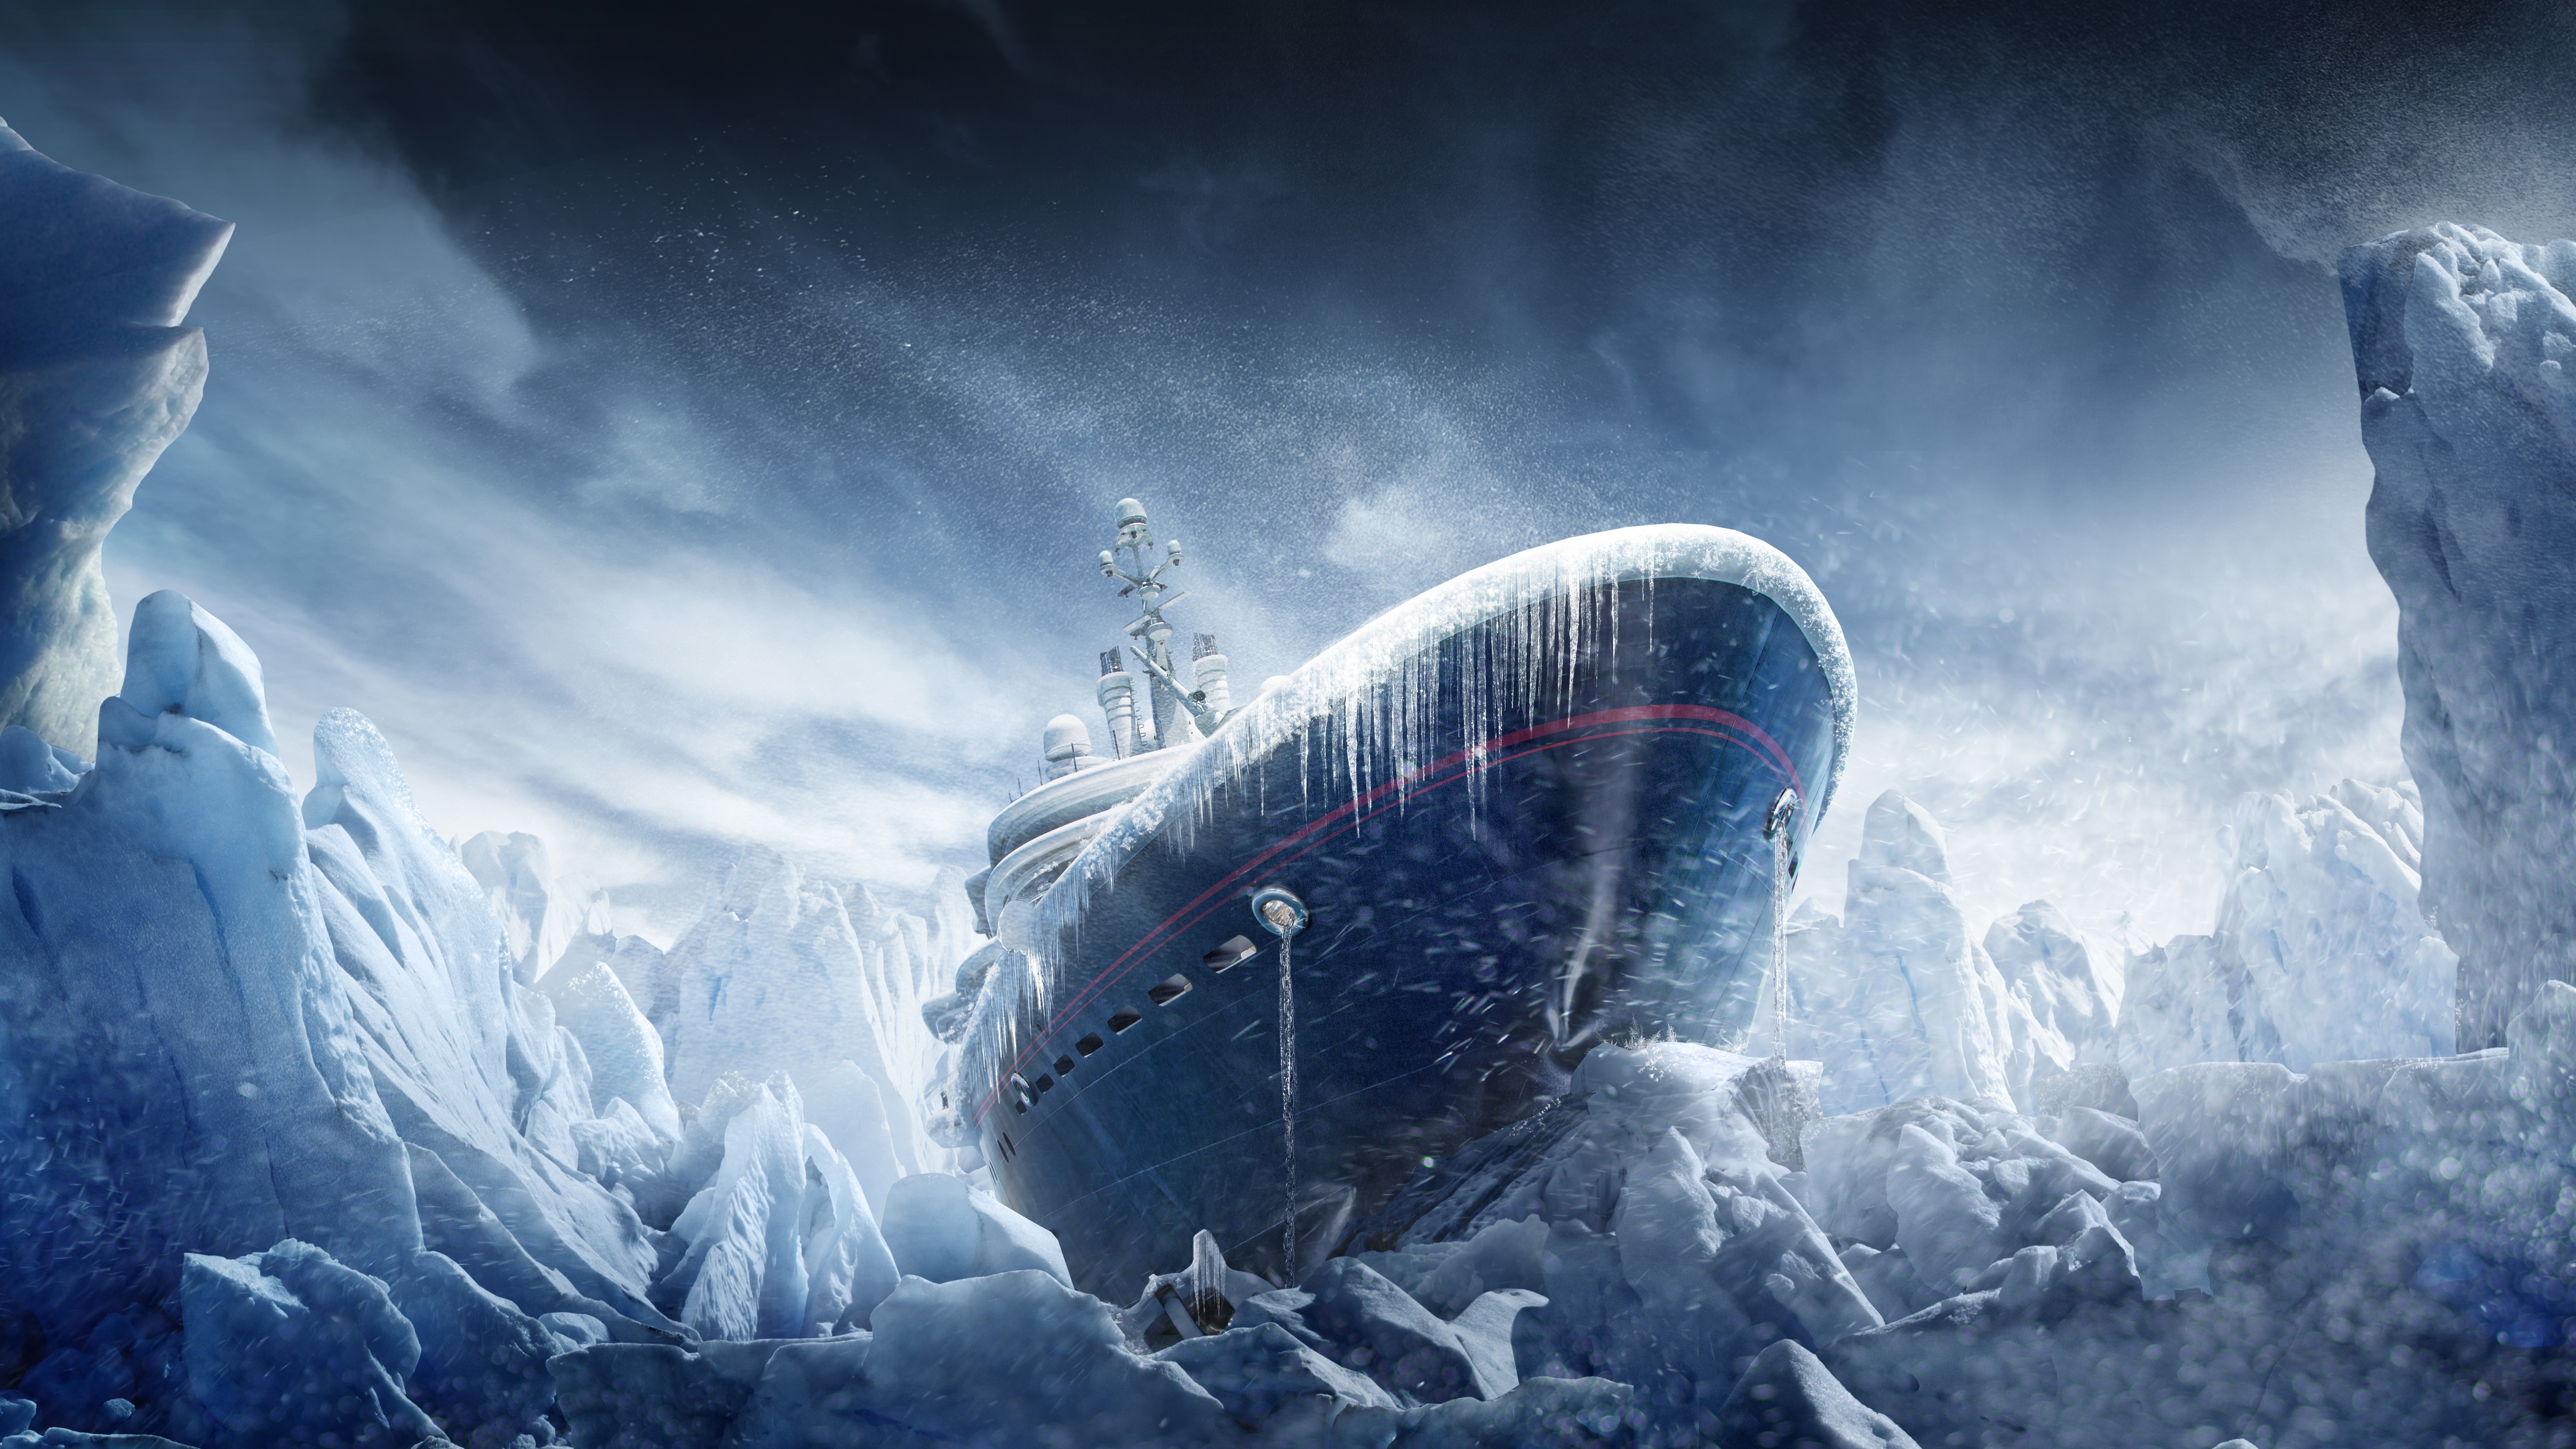 General 7680x4320 ship ice artwork cold snow storm vehicle digital art